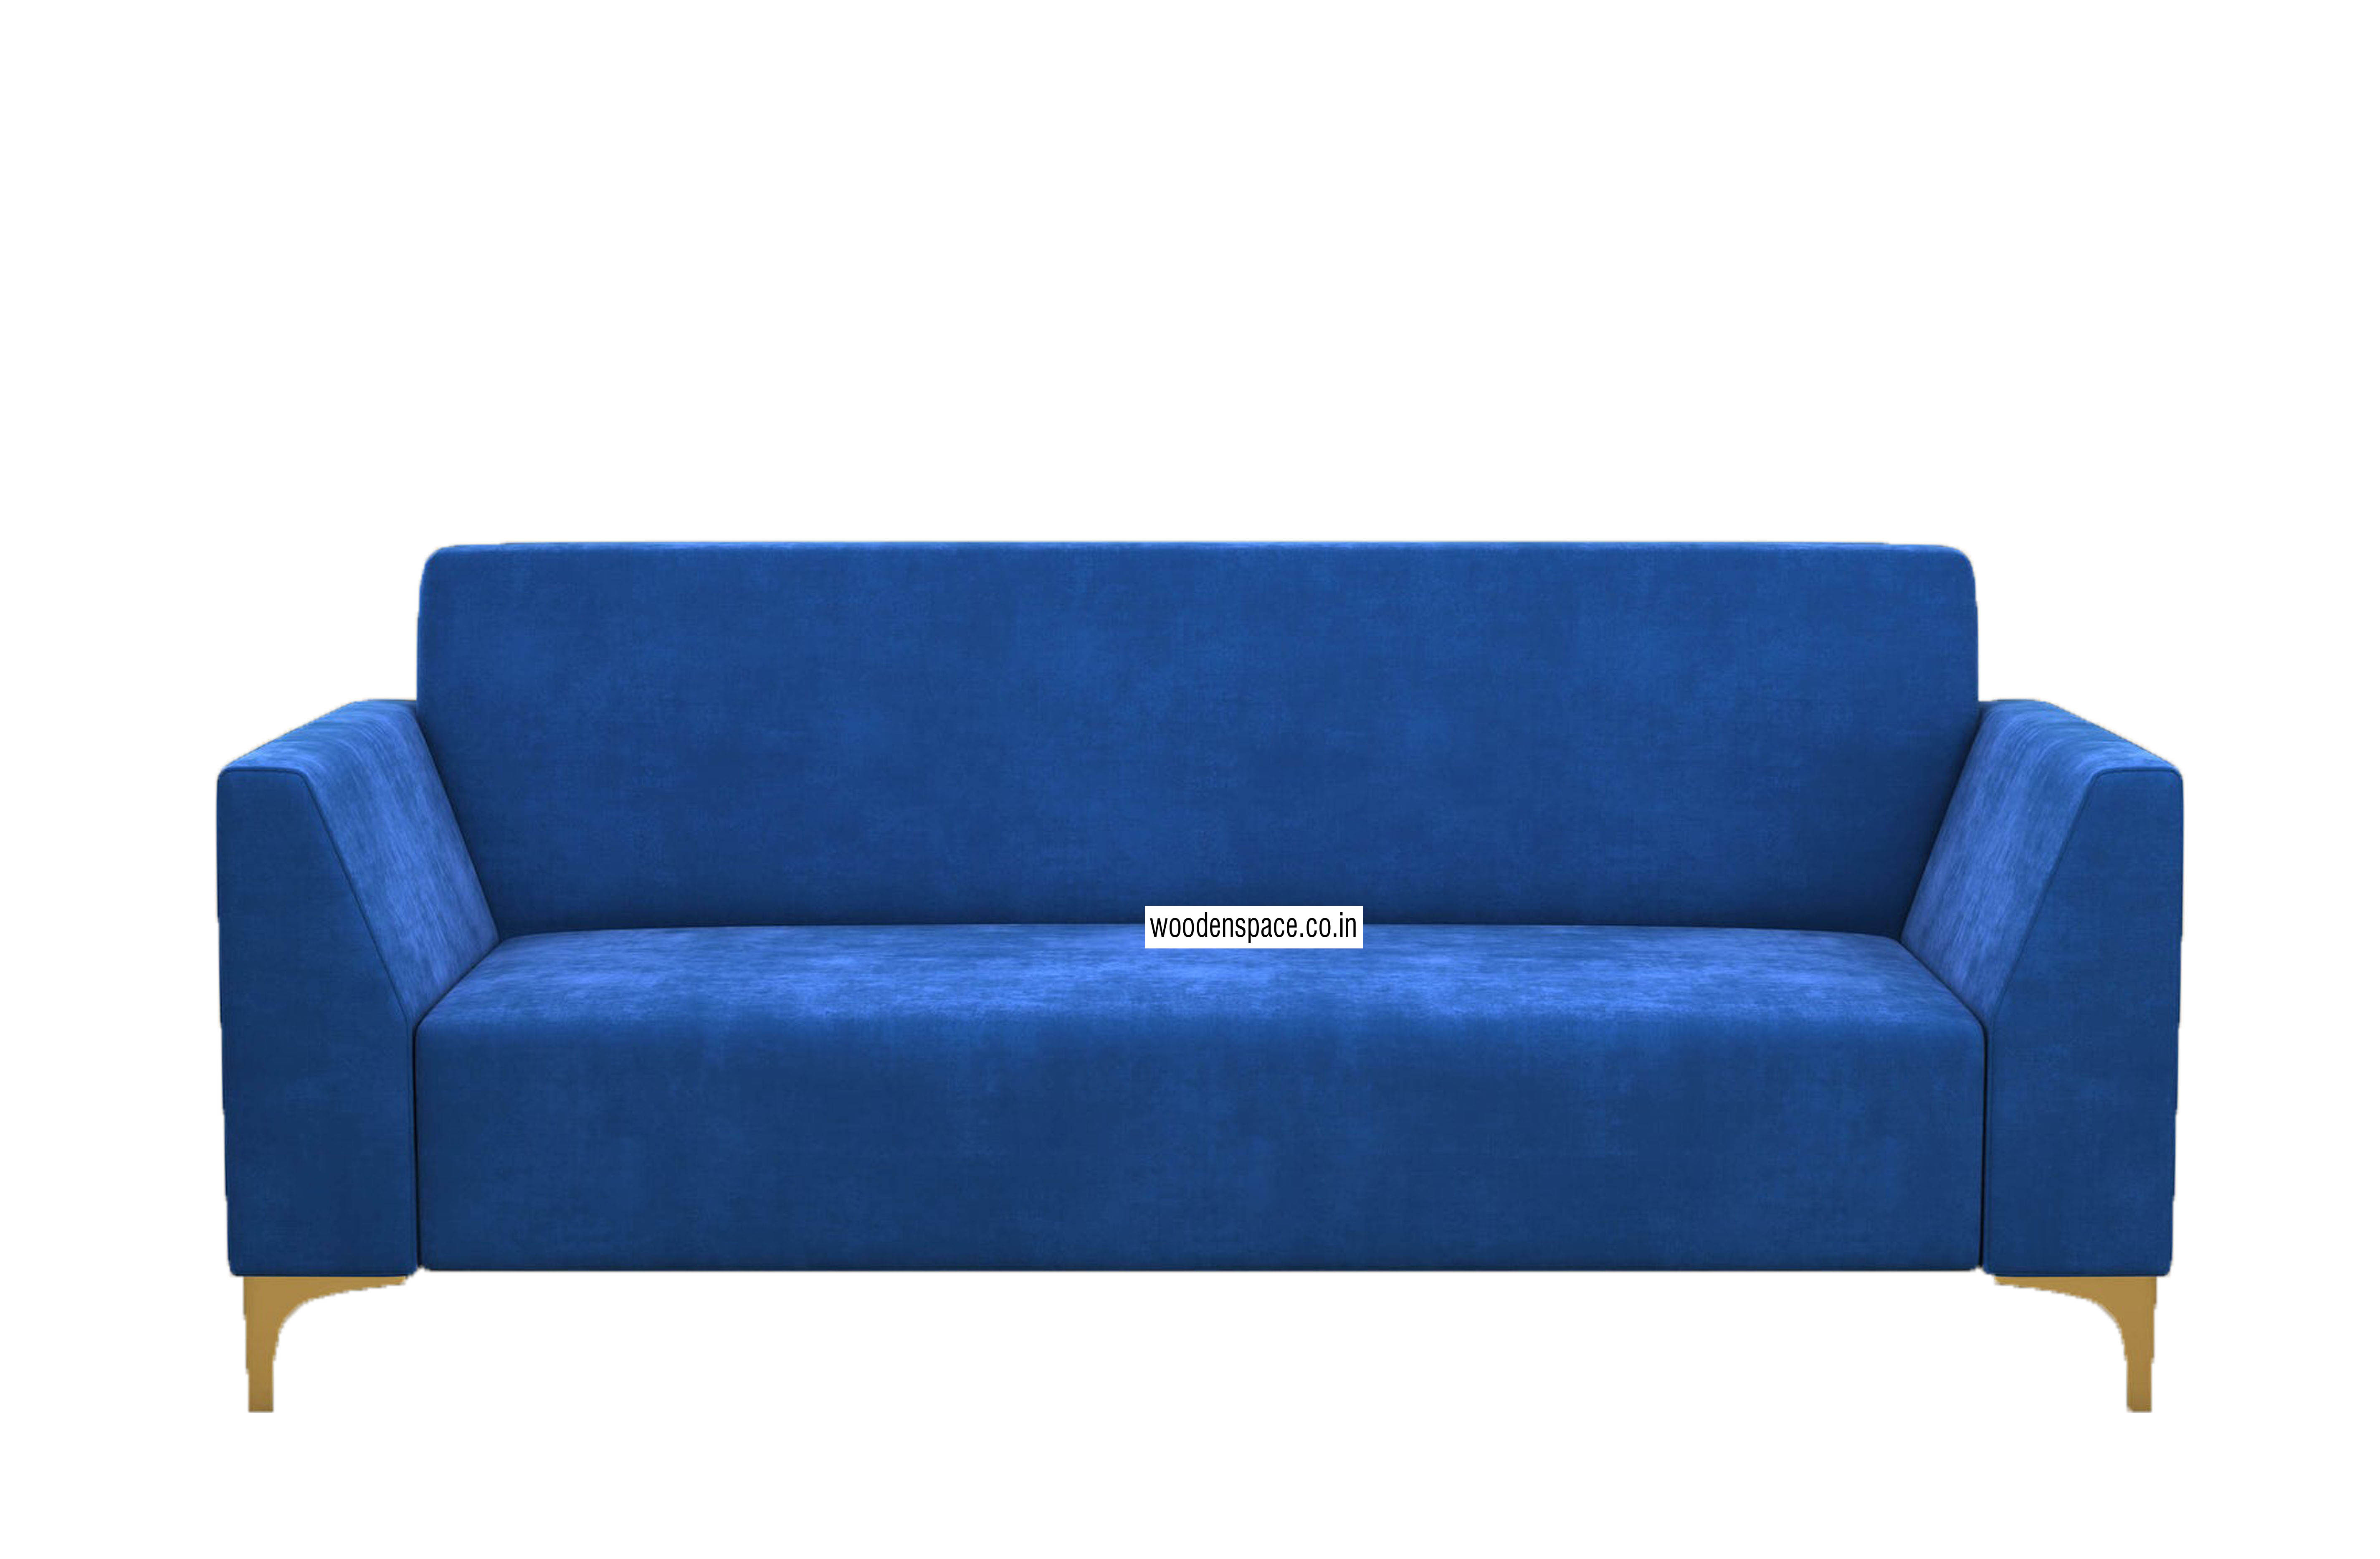 Kia 3 seater blue sofa